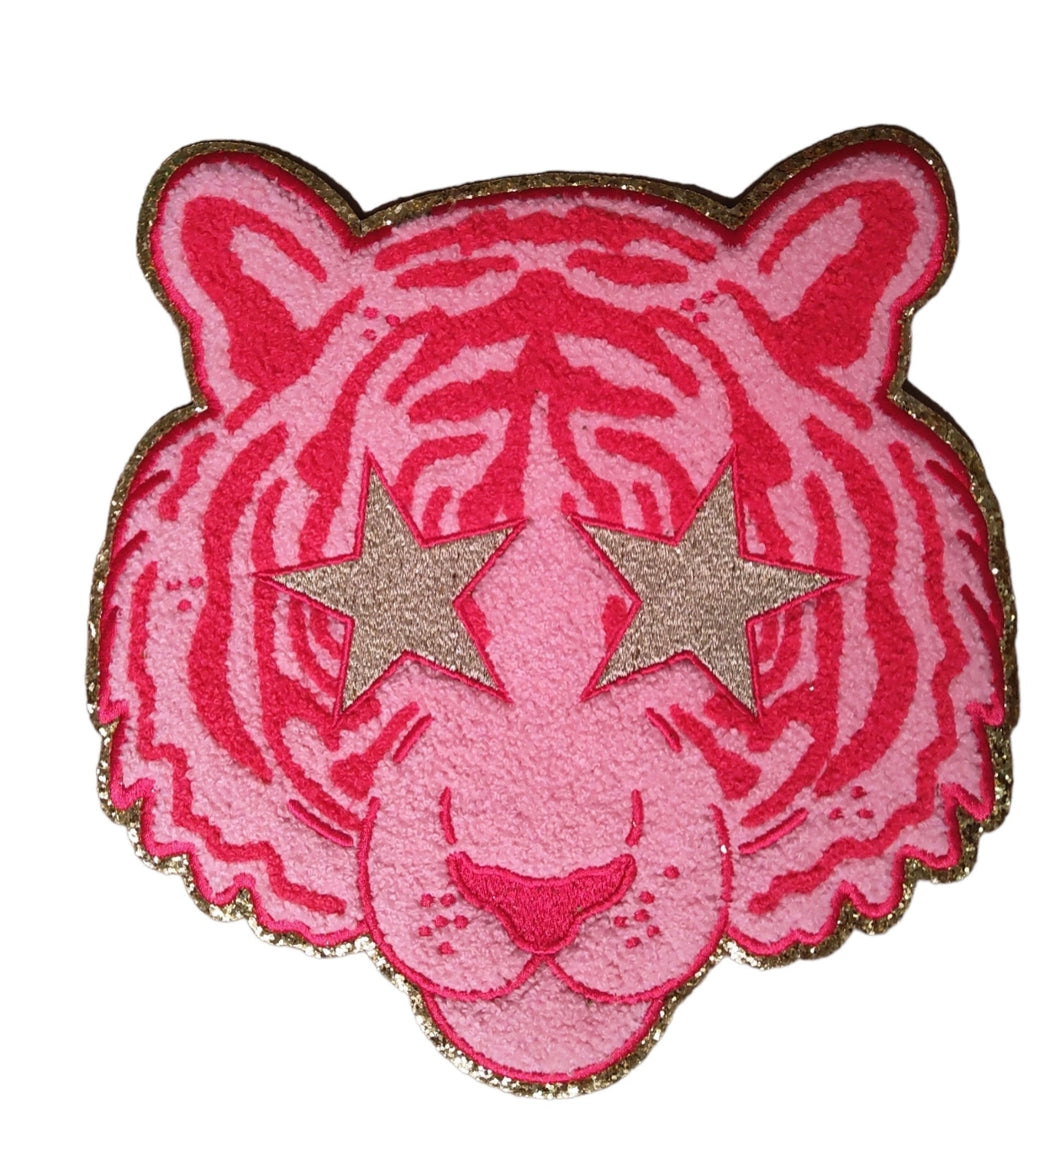 Tiger School spirit